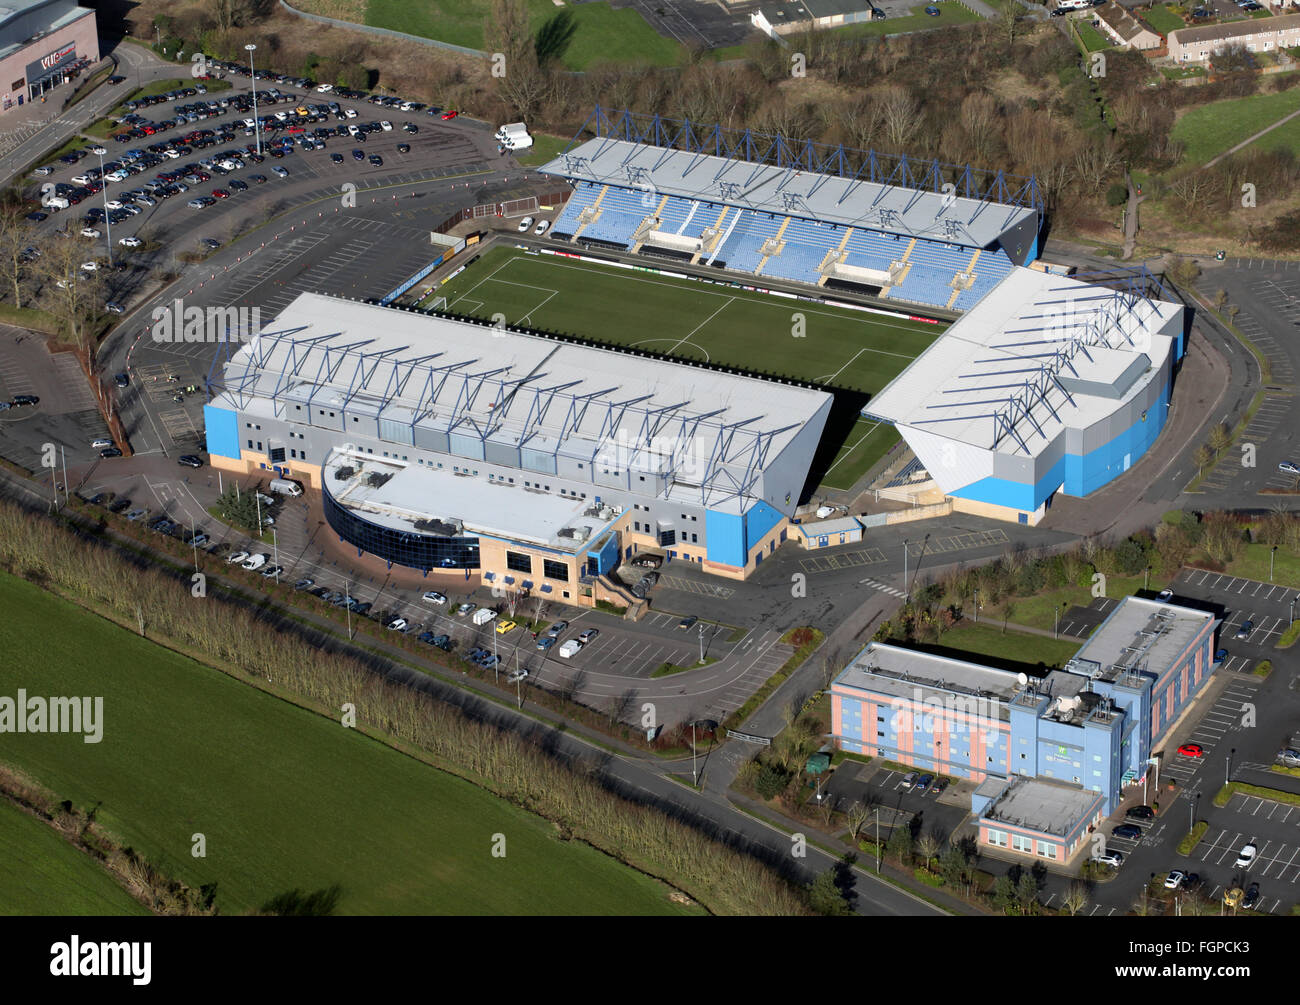 Vue aérienne d'Oxford United Football Club stade Kassam, UK Banque D'Images